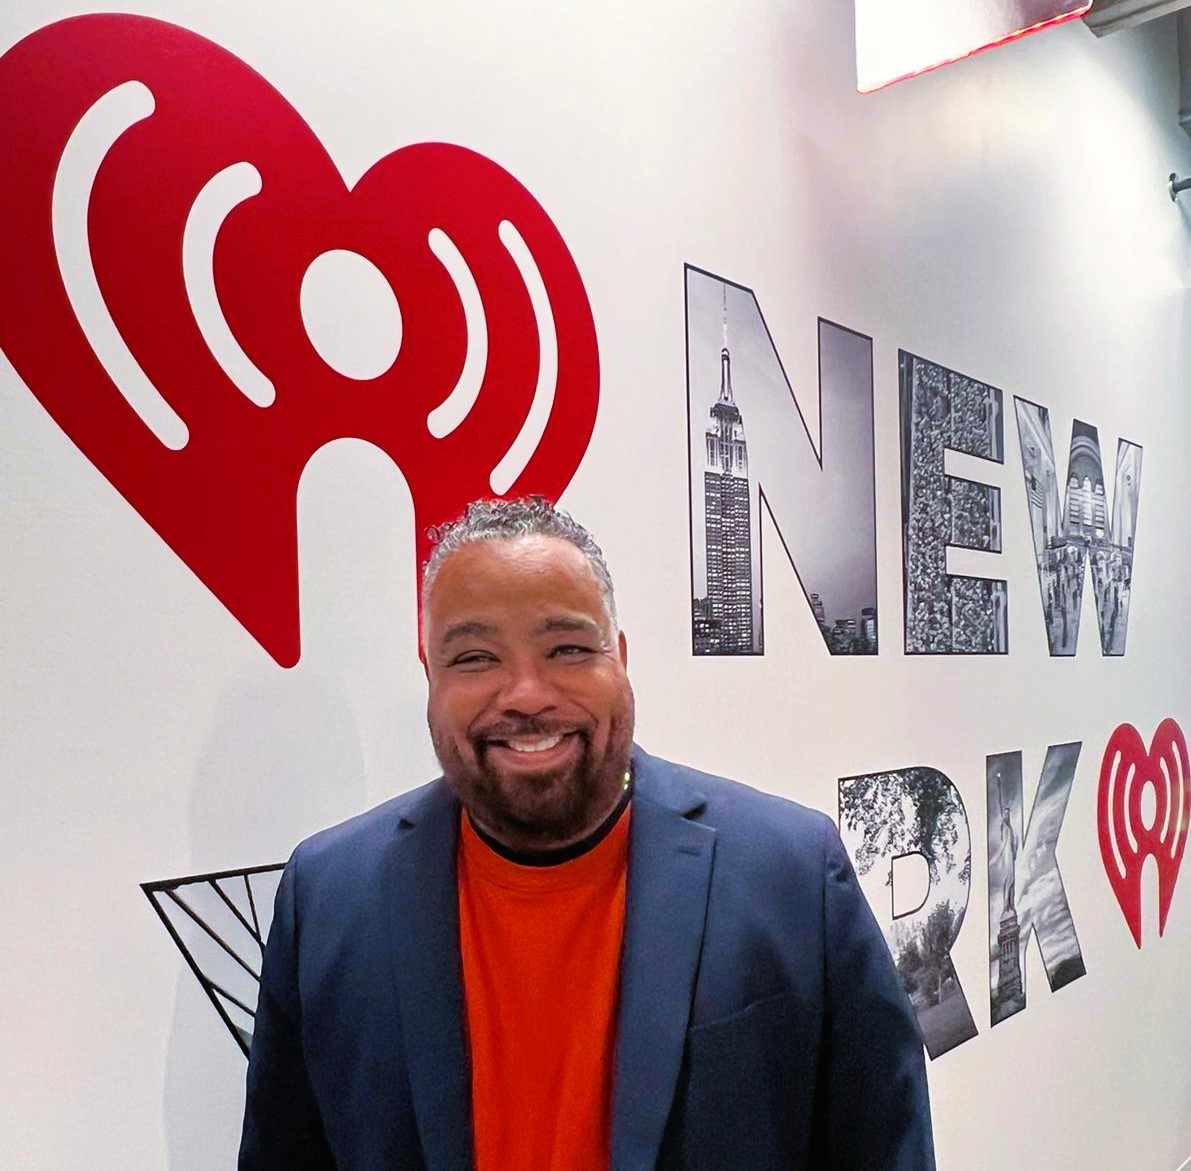 NY based Caribbean radio station partners with popular iHeartRadio